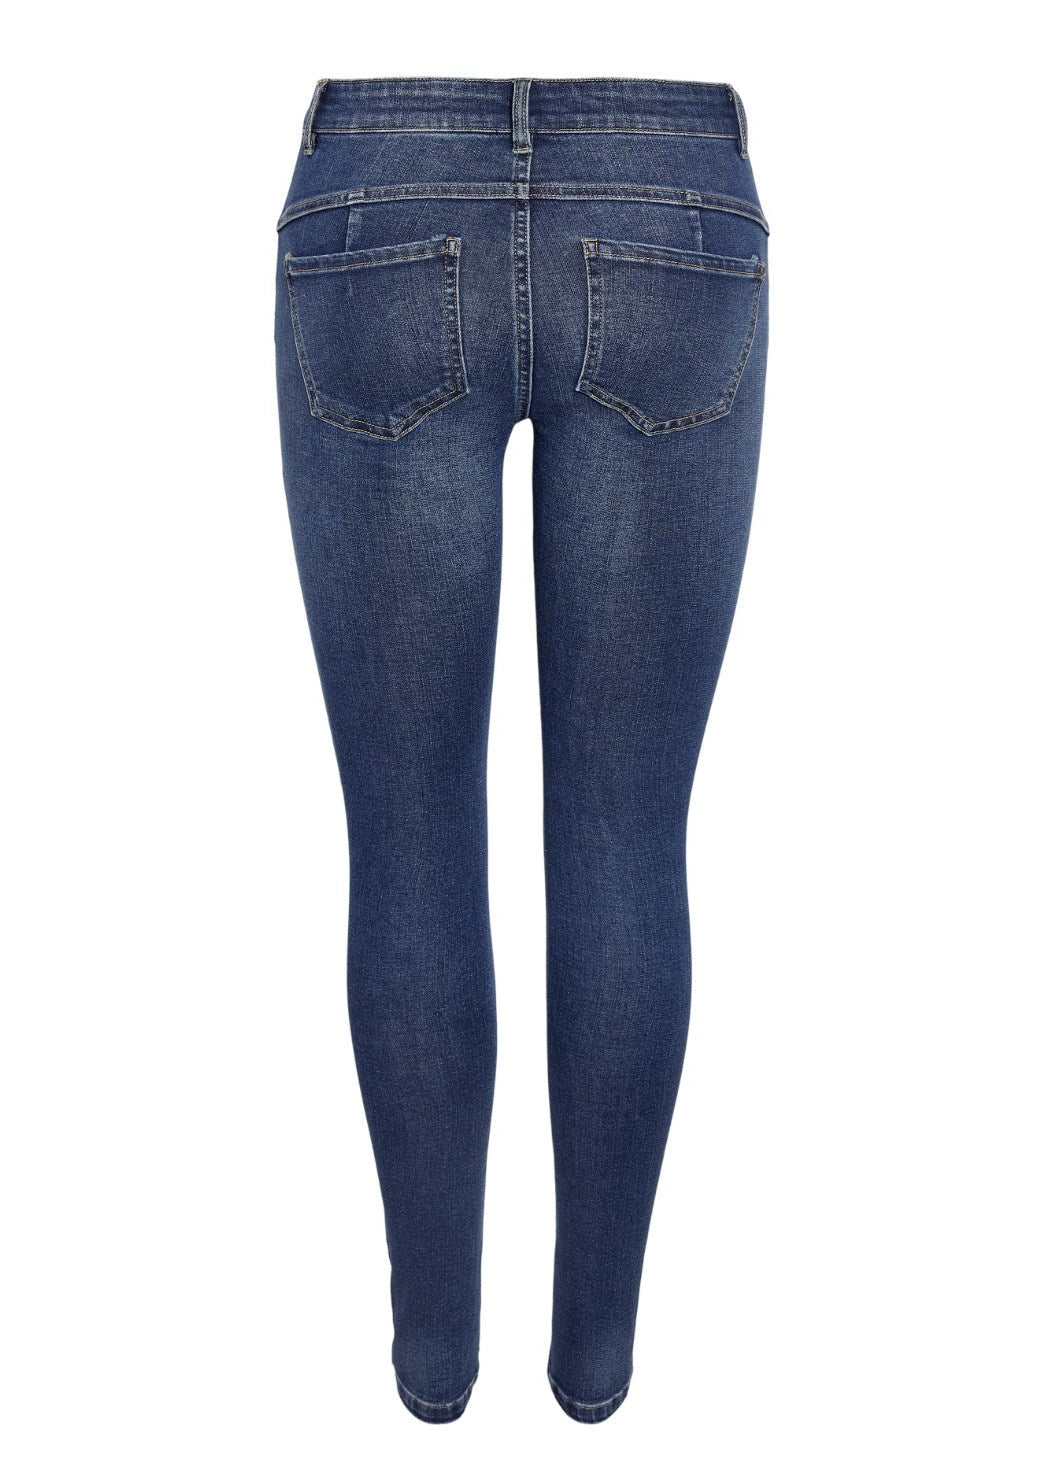 Jen Shaper Jeans - Blue - for kvinde - NOISY MAY - Jeans